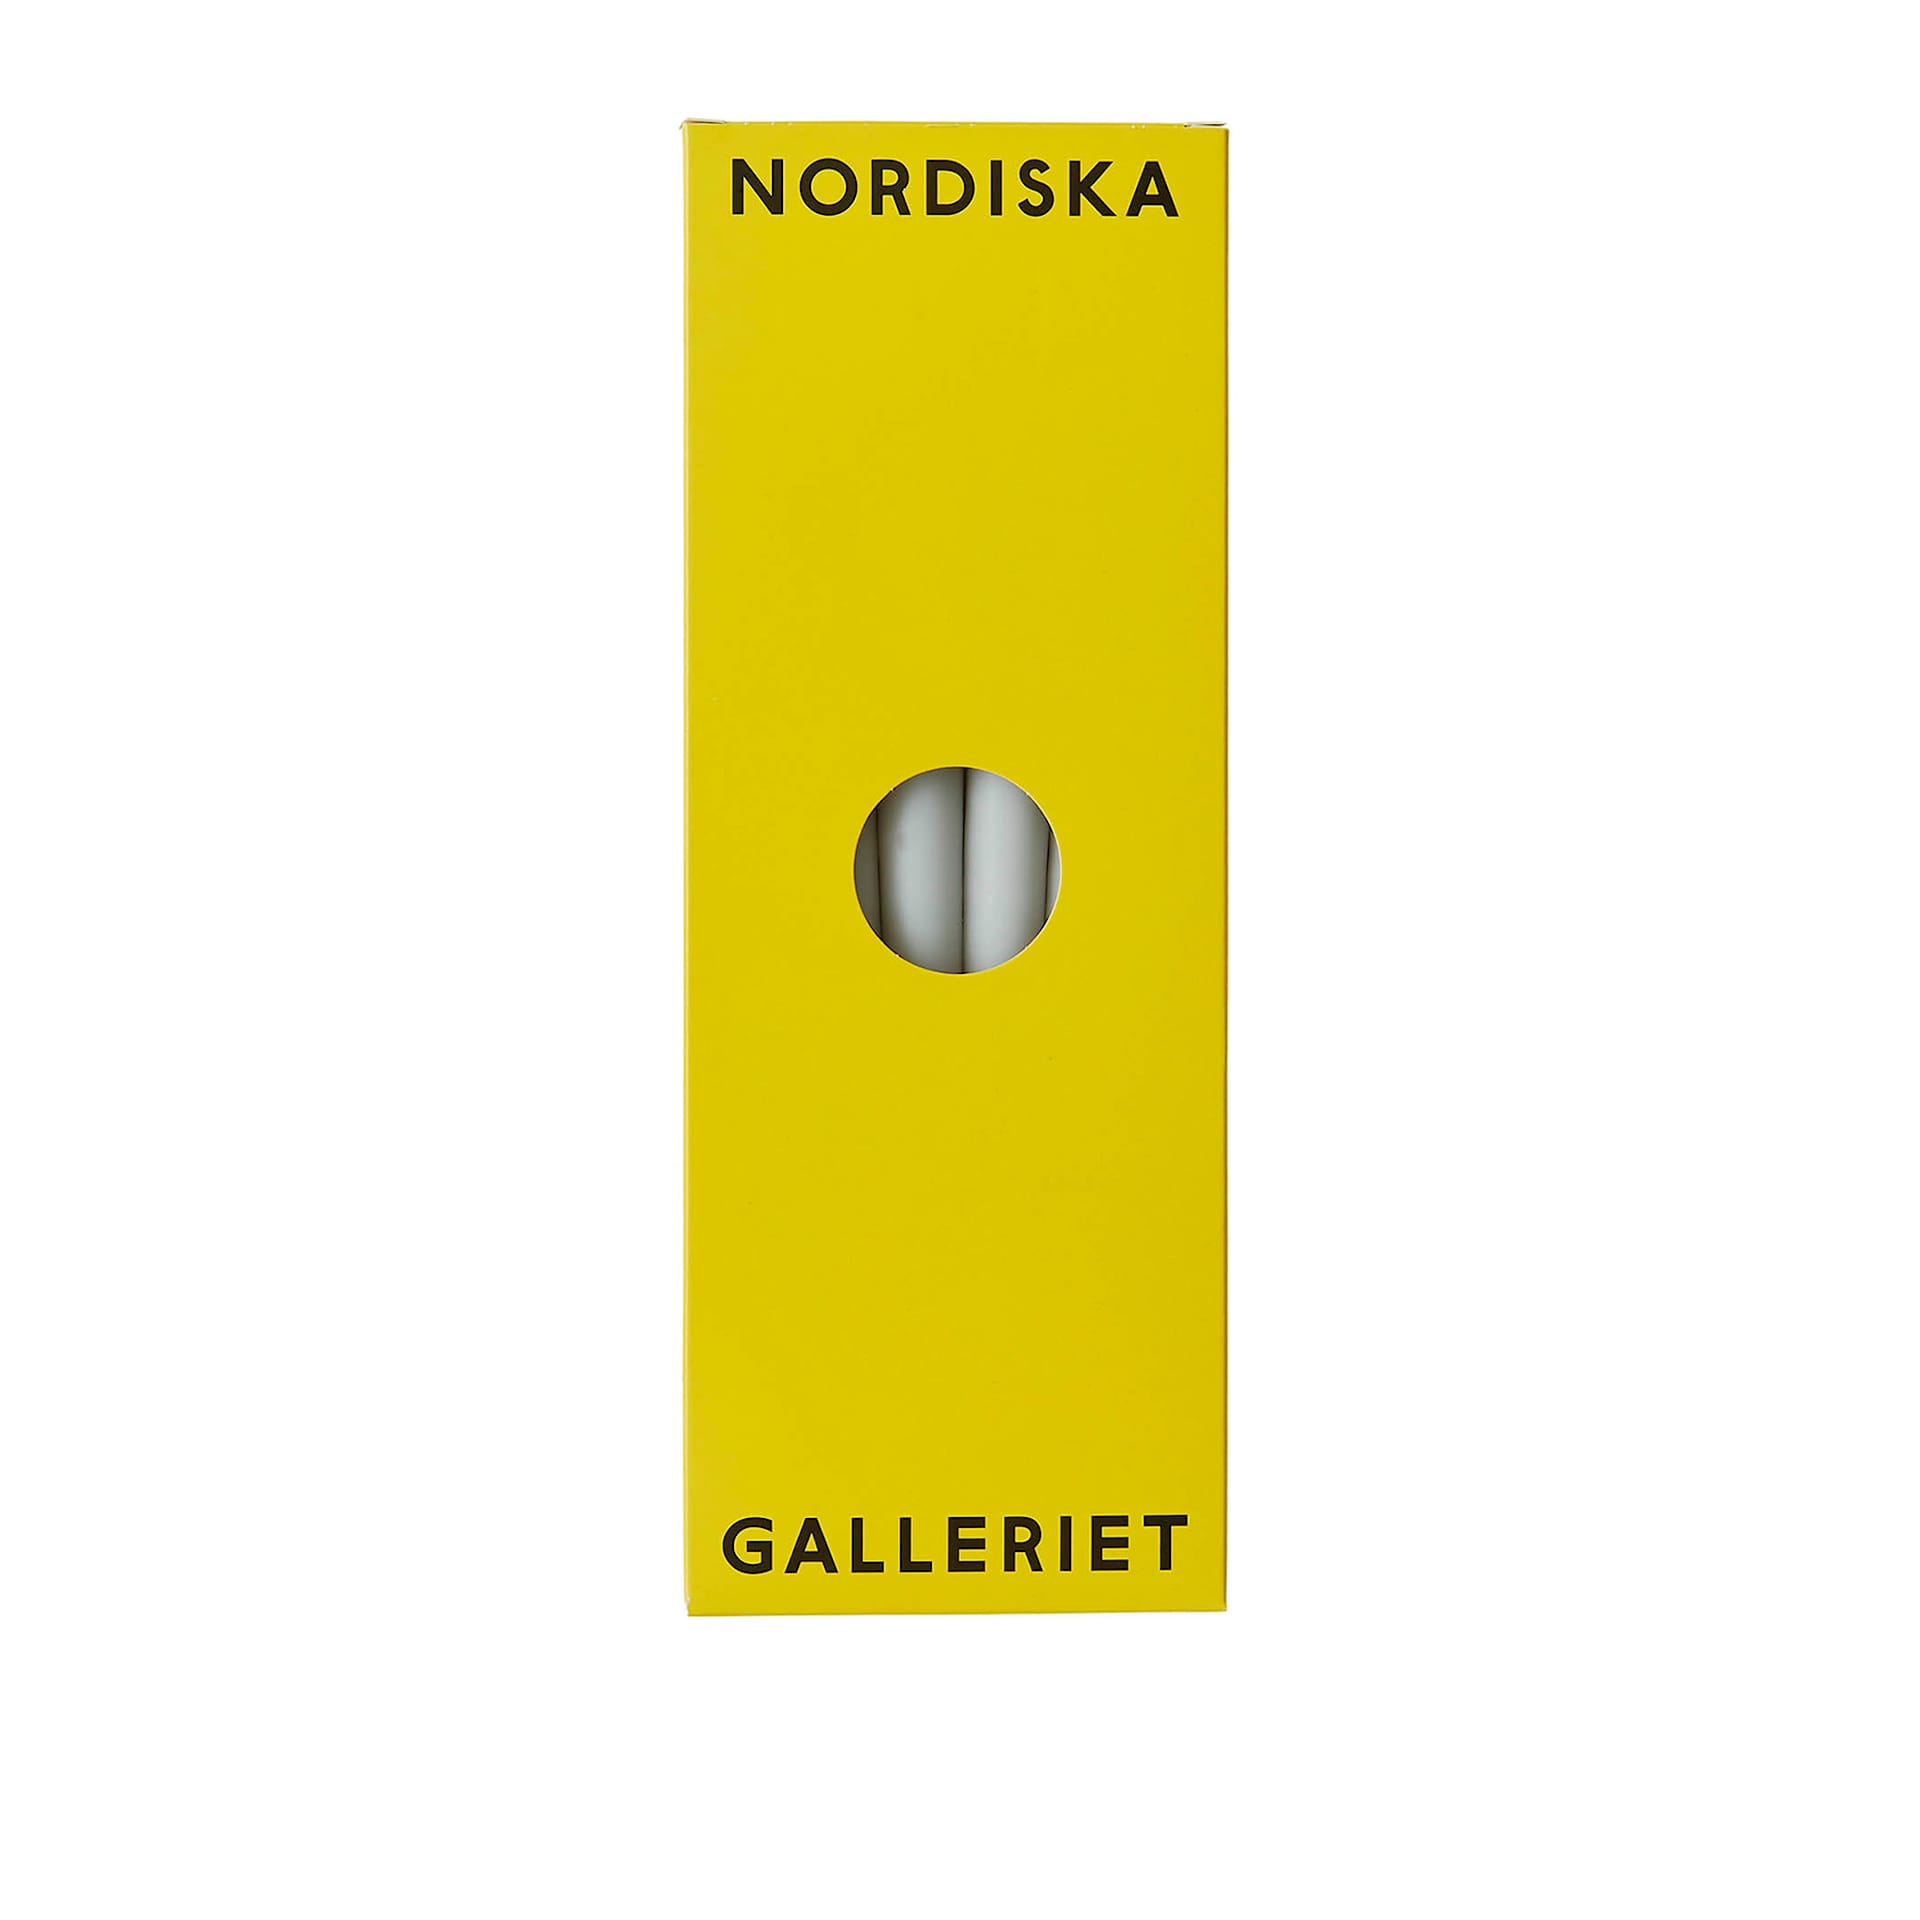 Nordiska Galleriet Candles Pack of 6 - Antique White - Nordiska Galleriet - NO GA